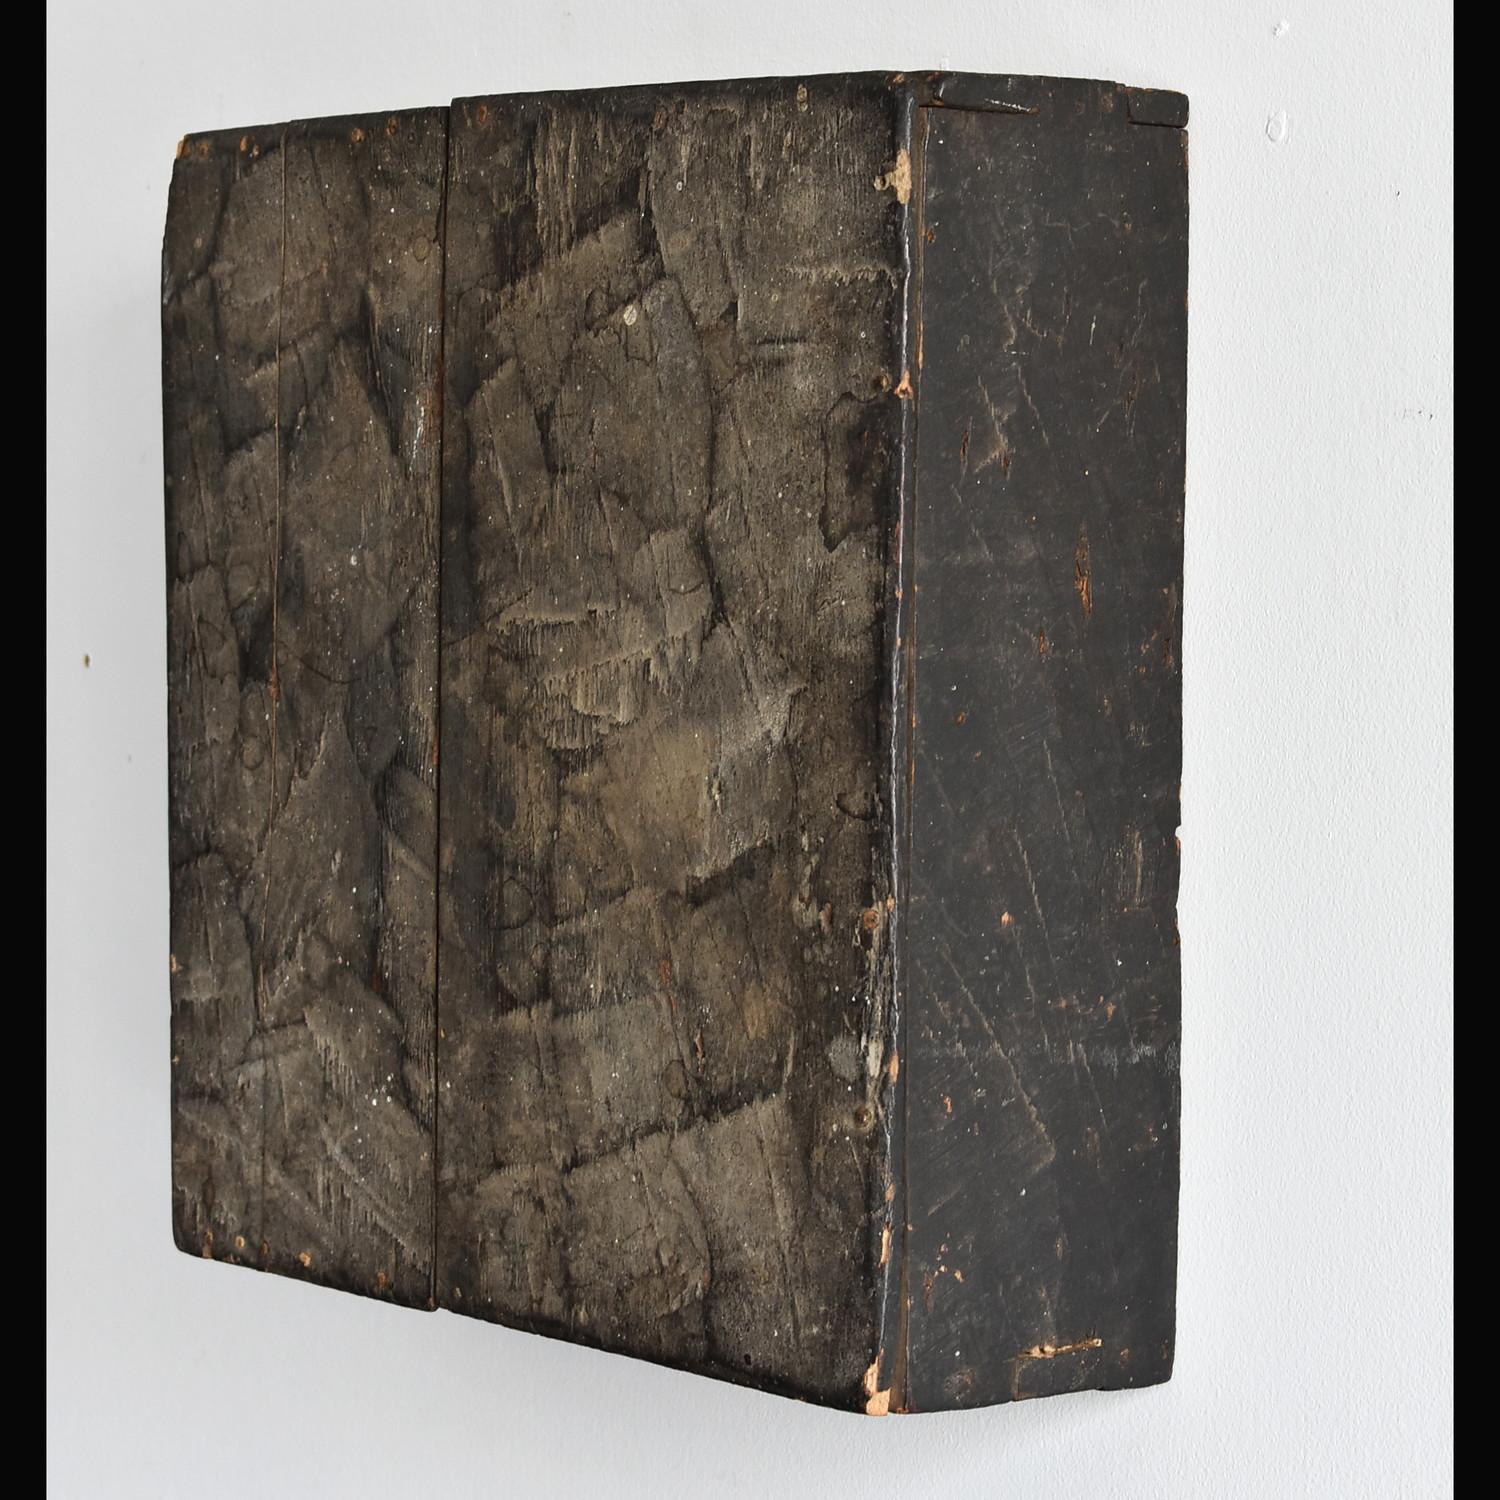 Cedar Japanese Edo Period '18th-19th Century' Wooden Box Lid